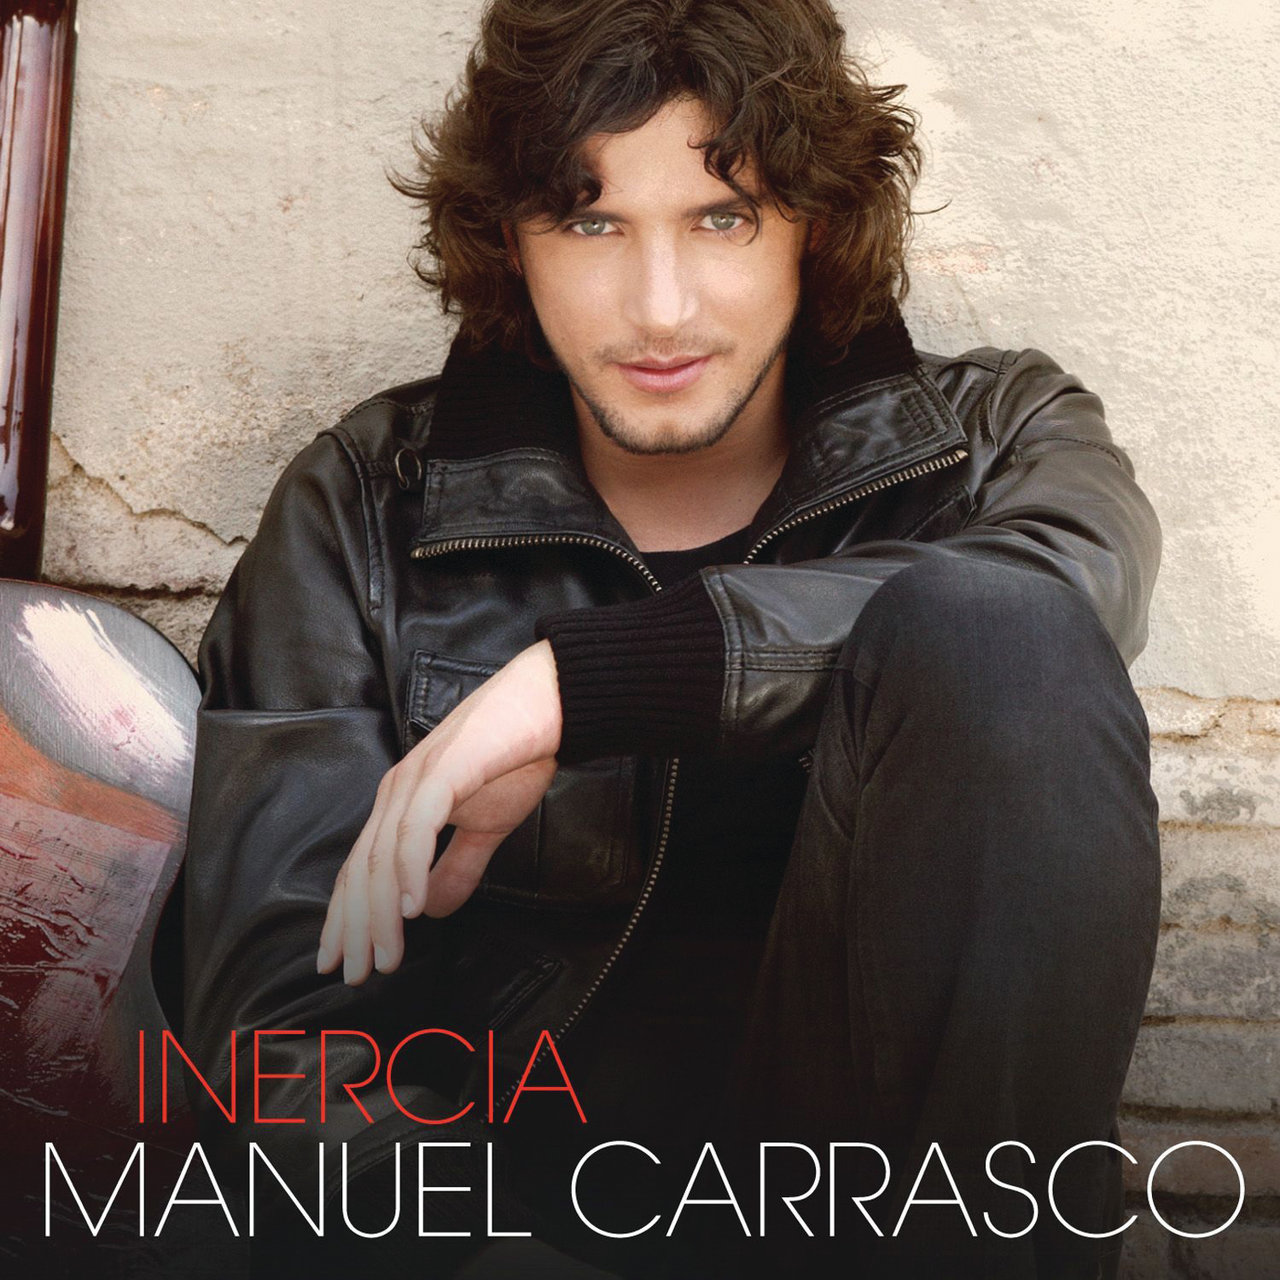 Manuel Carrasco Inercia cover artwork